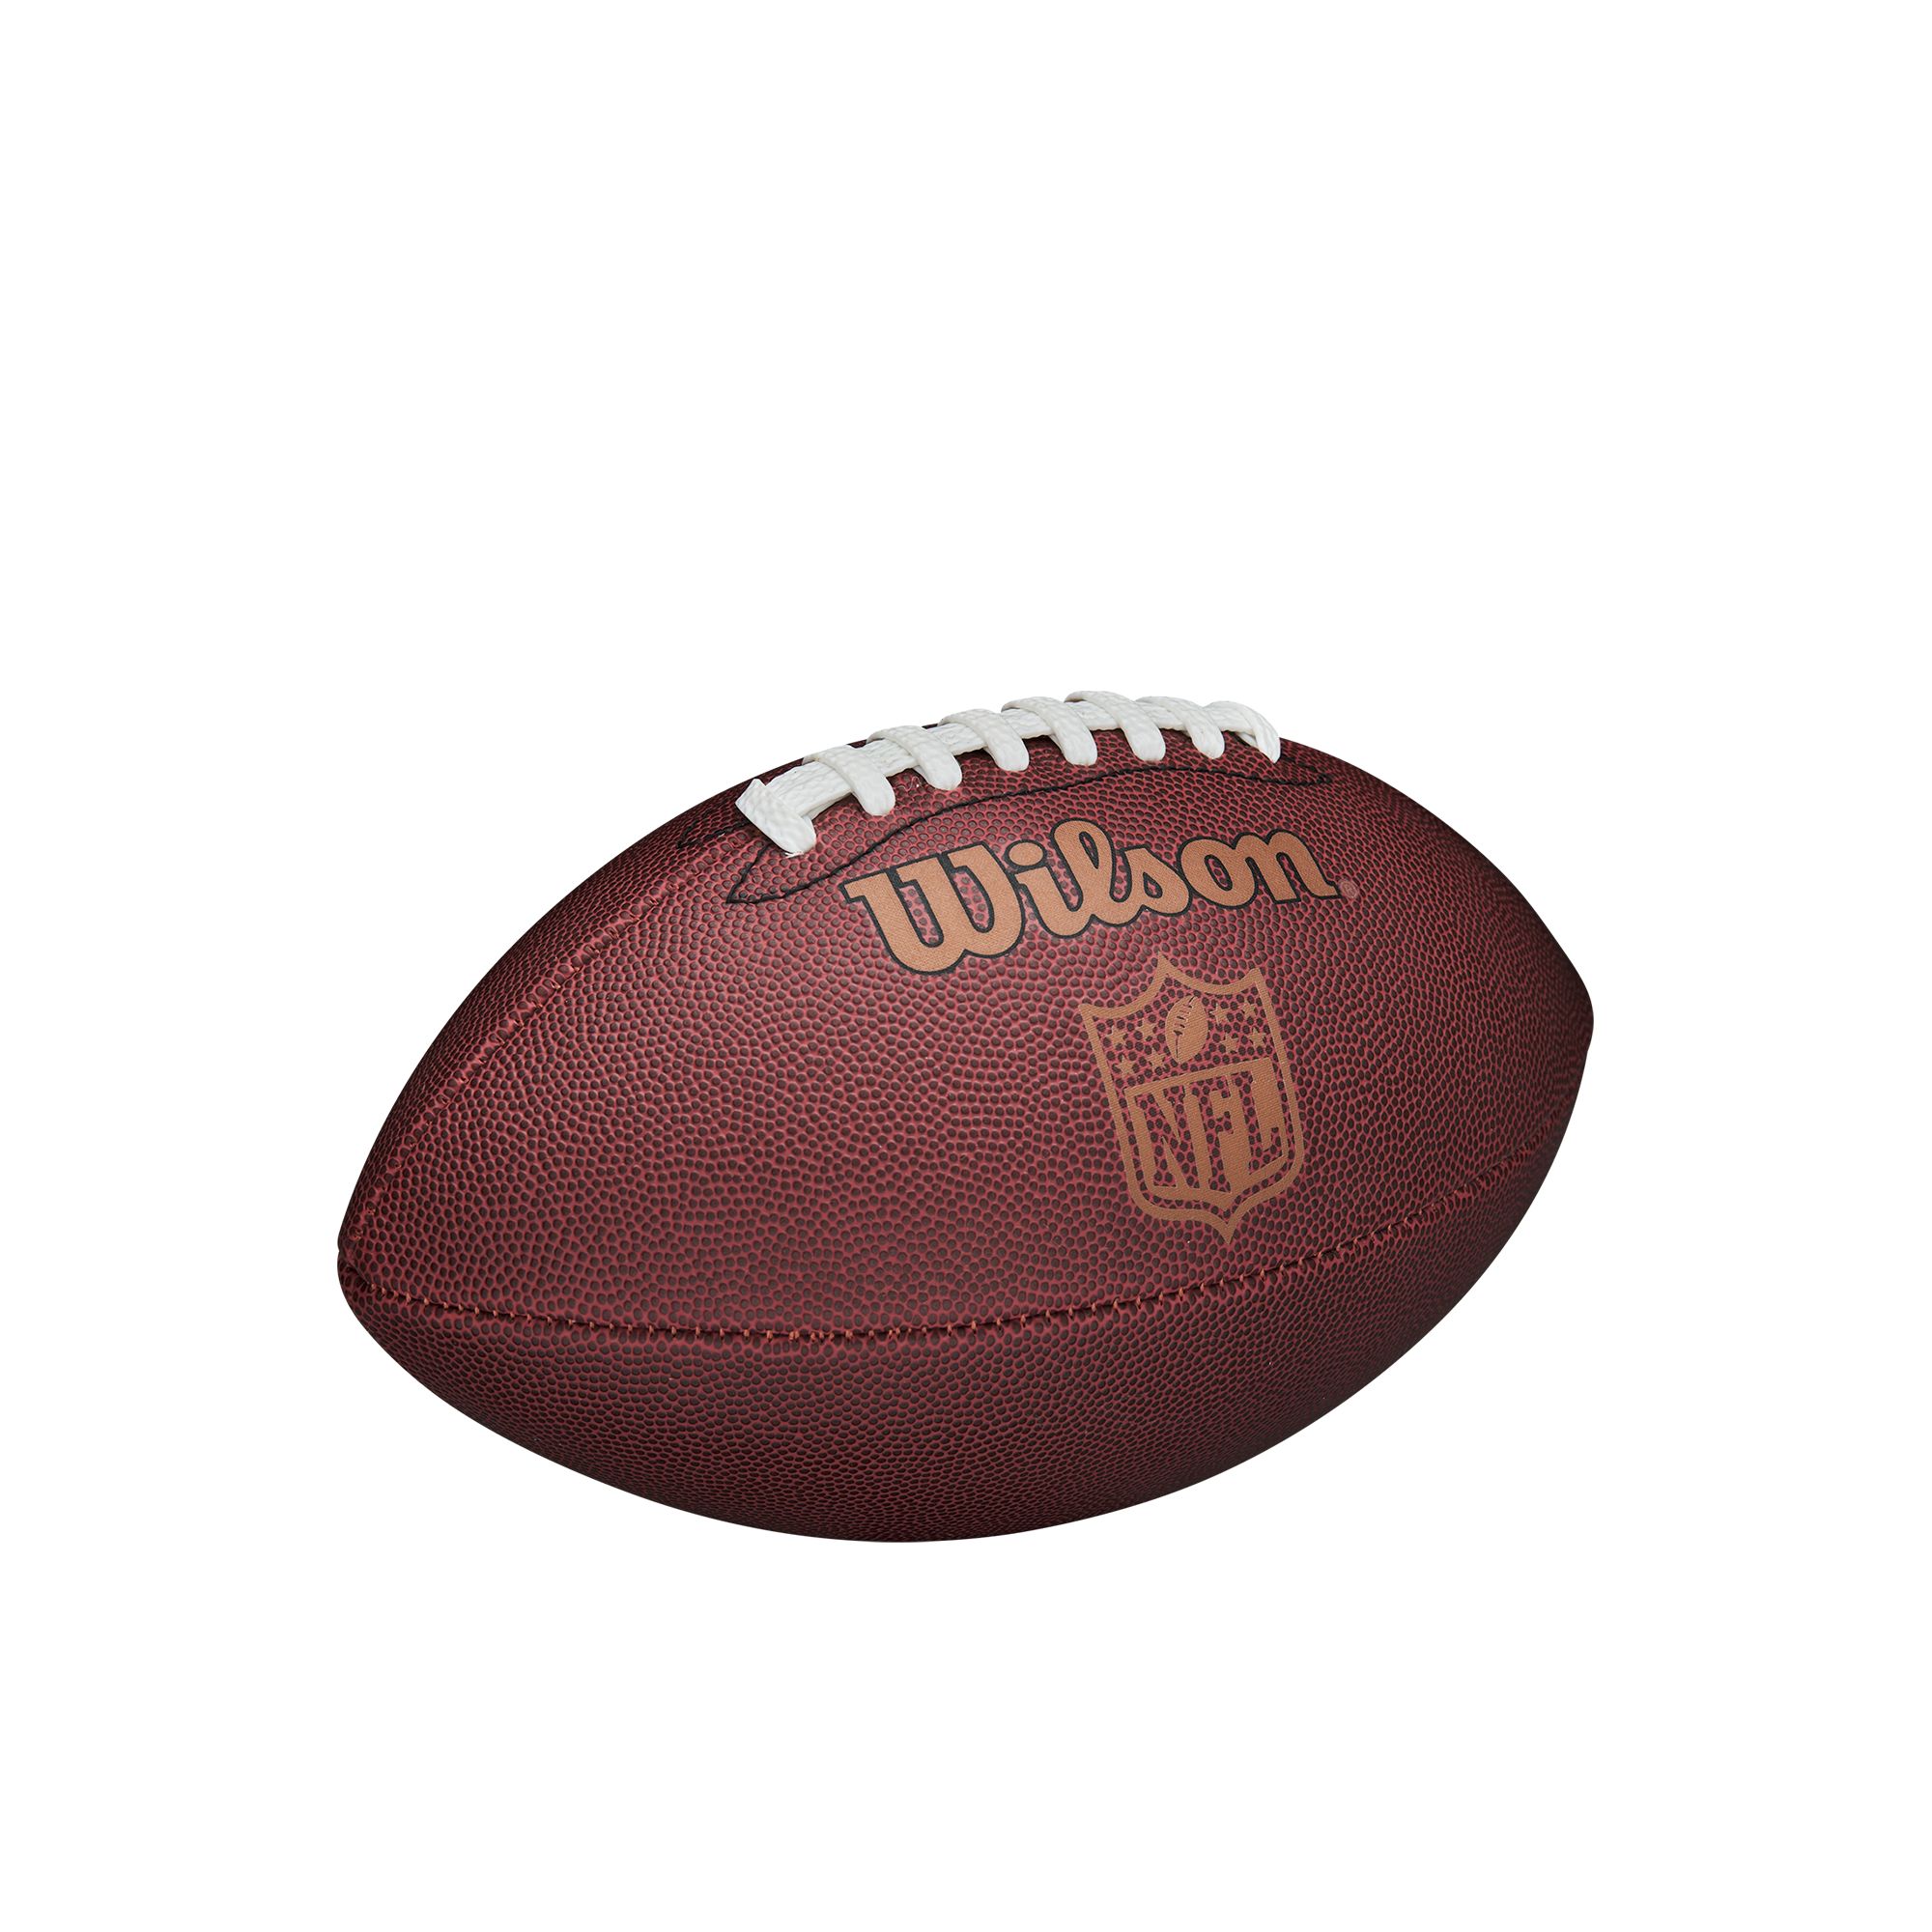 Image of Wilson Nfl® Ignition Junior Football